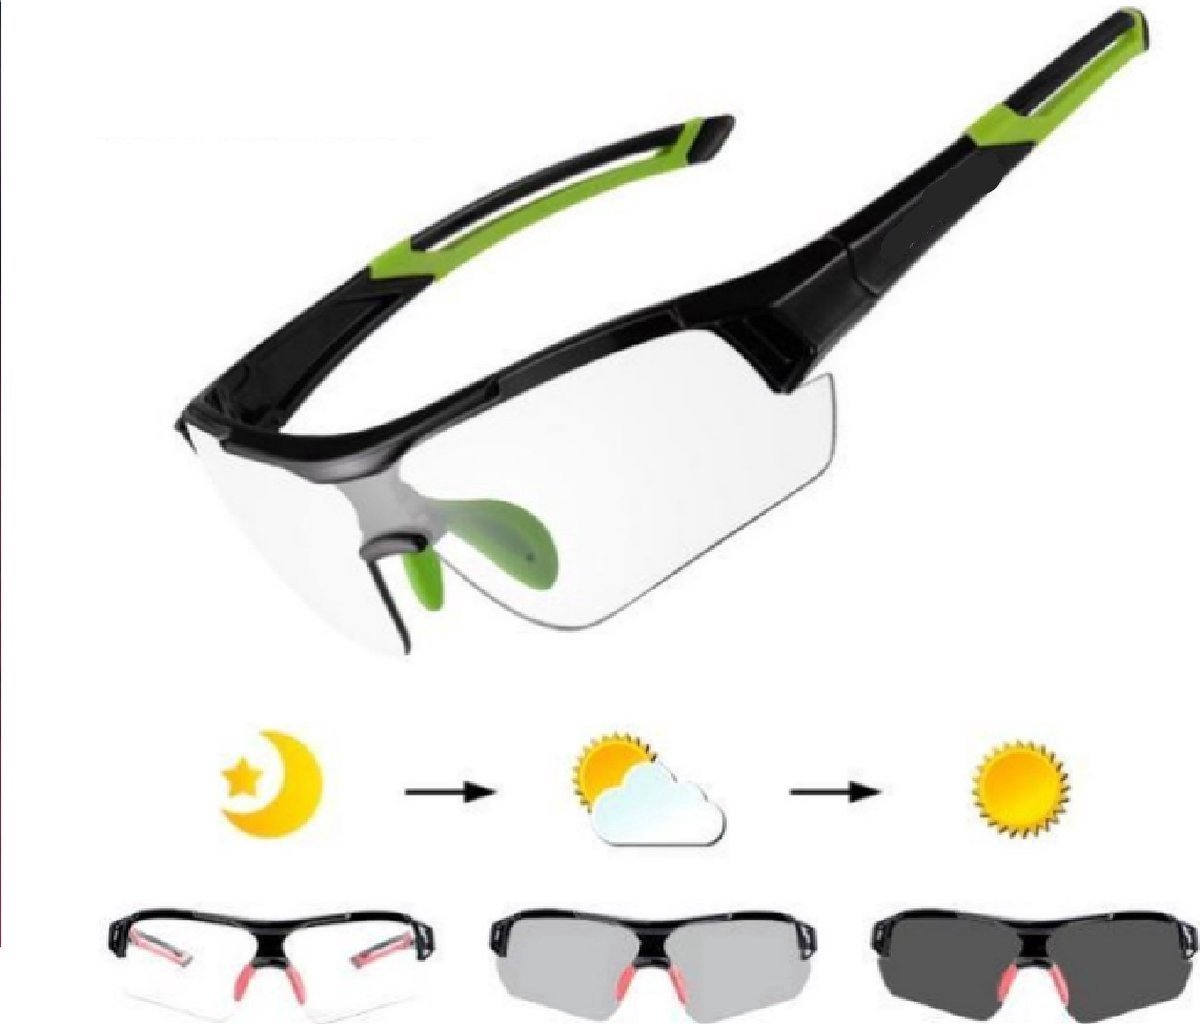 Velox Meekleurende Fietsbril - Zonnebril - Fiets Sport Bril - Premium fotochromatische Fietsbril Set Groen